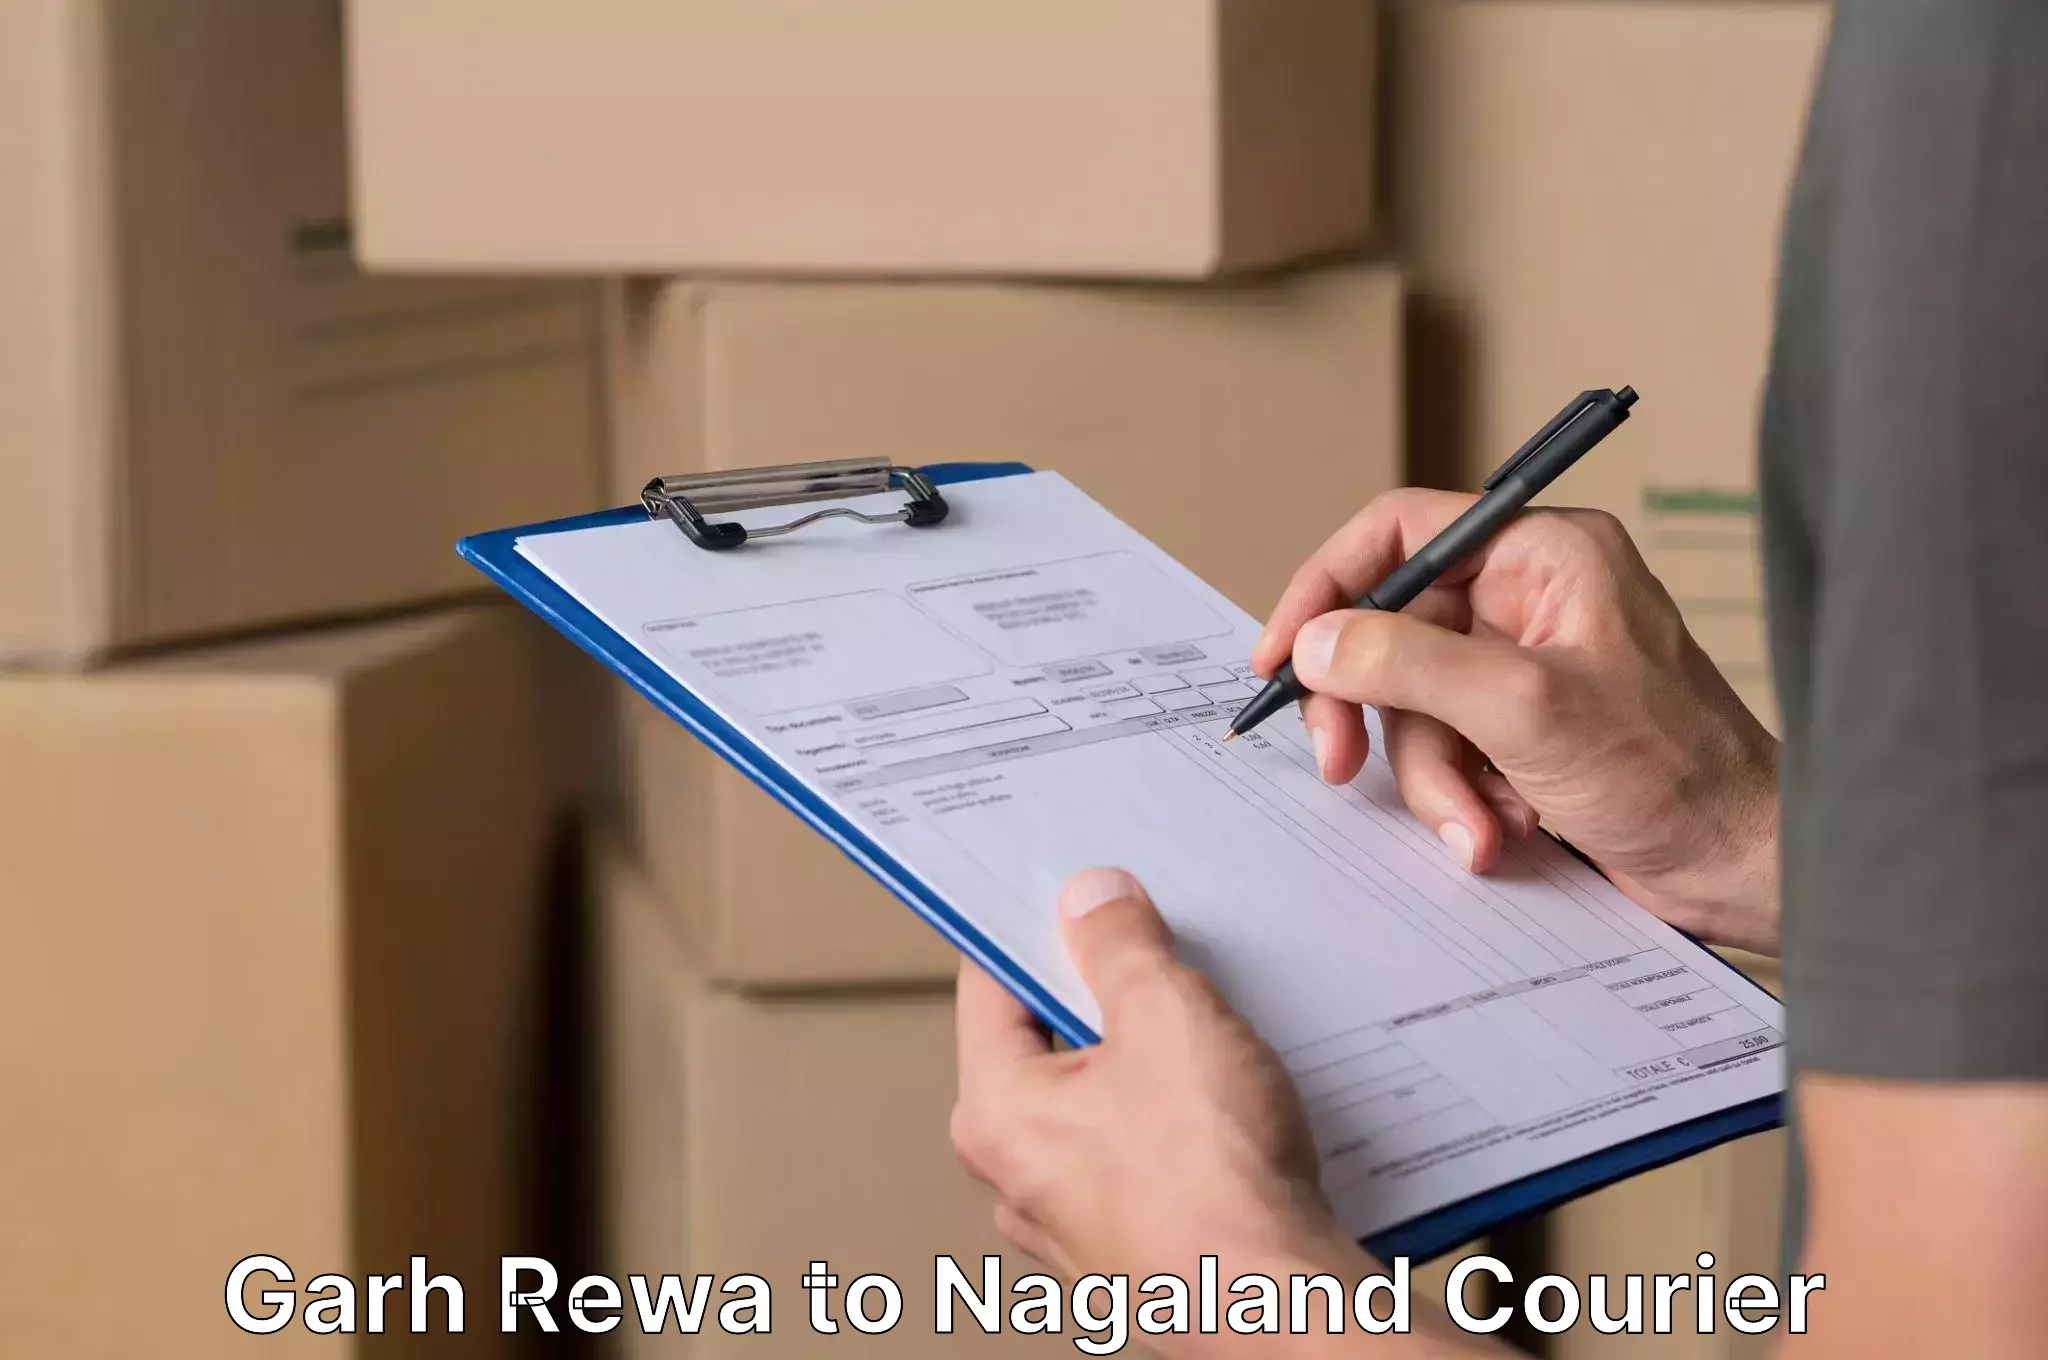 Furniture moving experts Garh Rewa to Nagaland